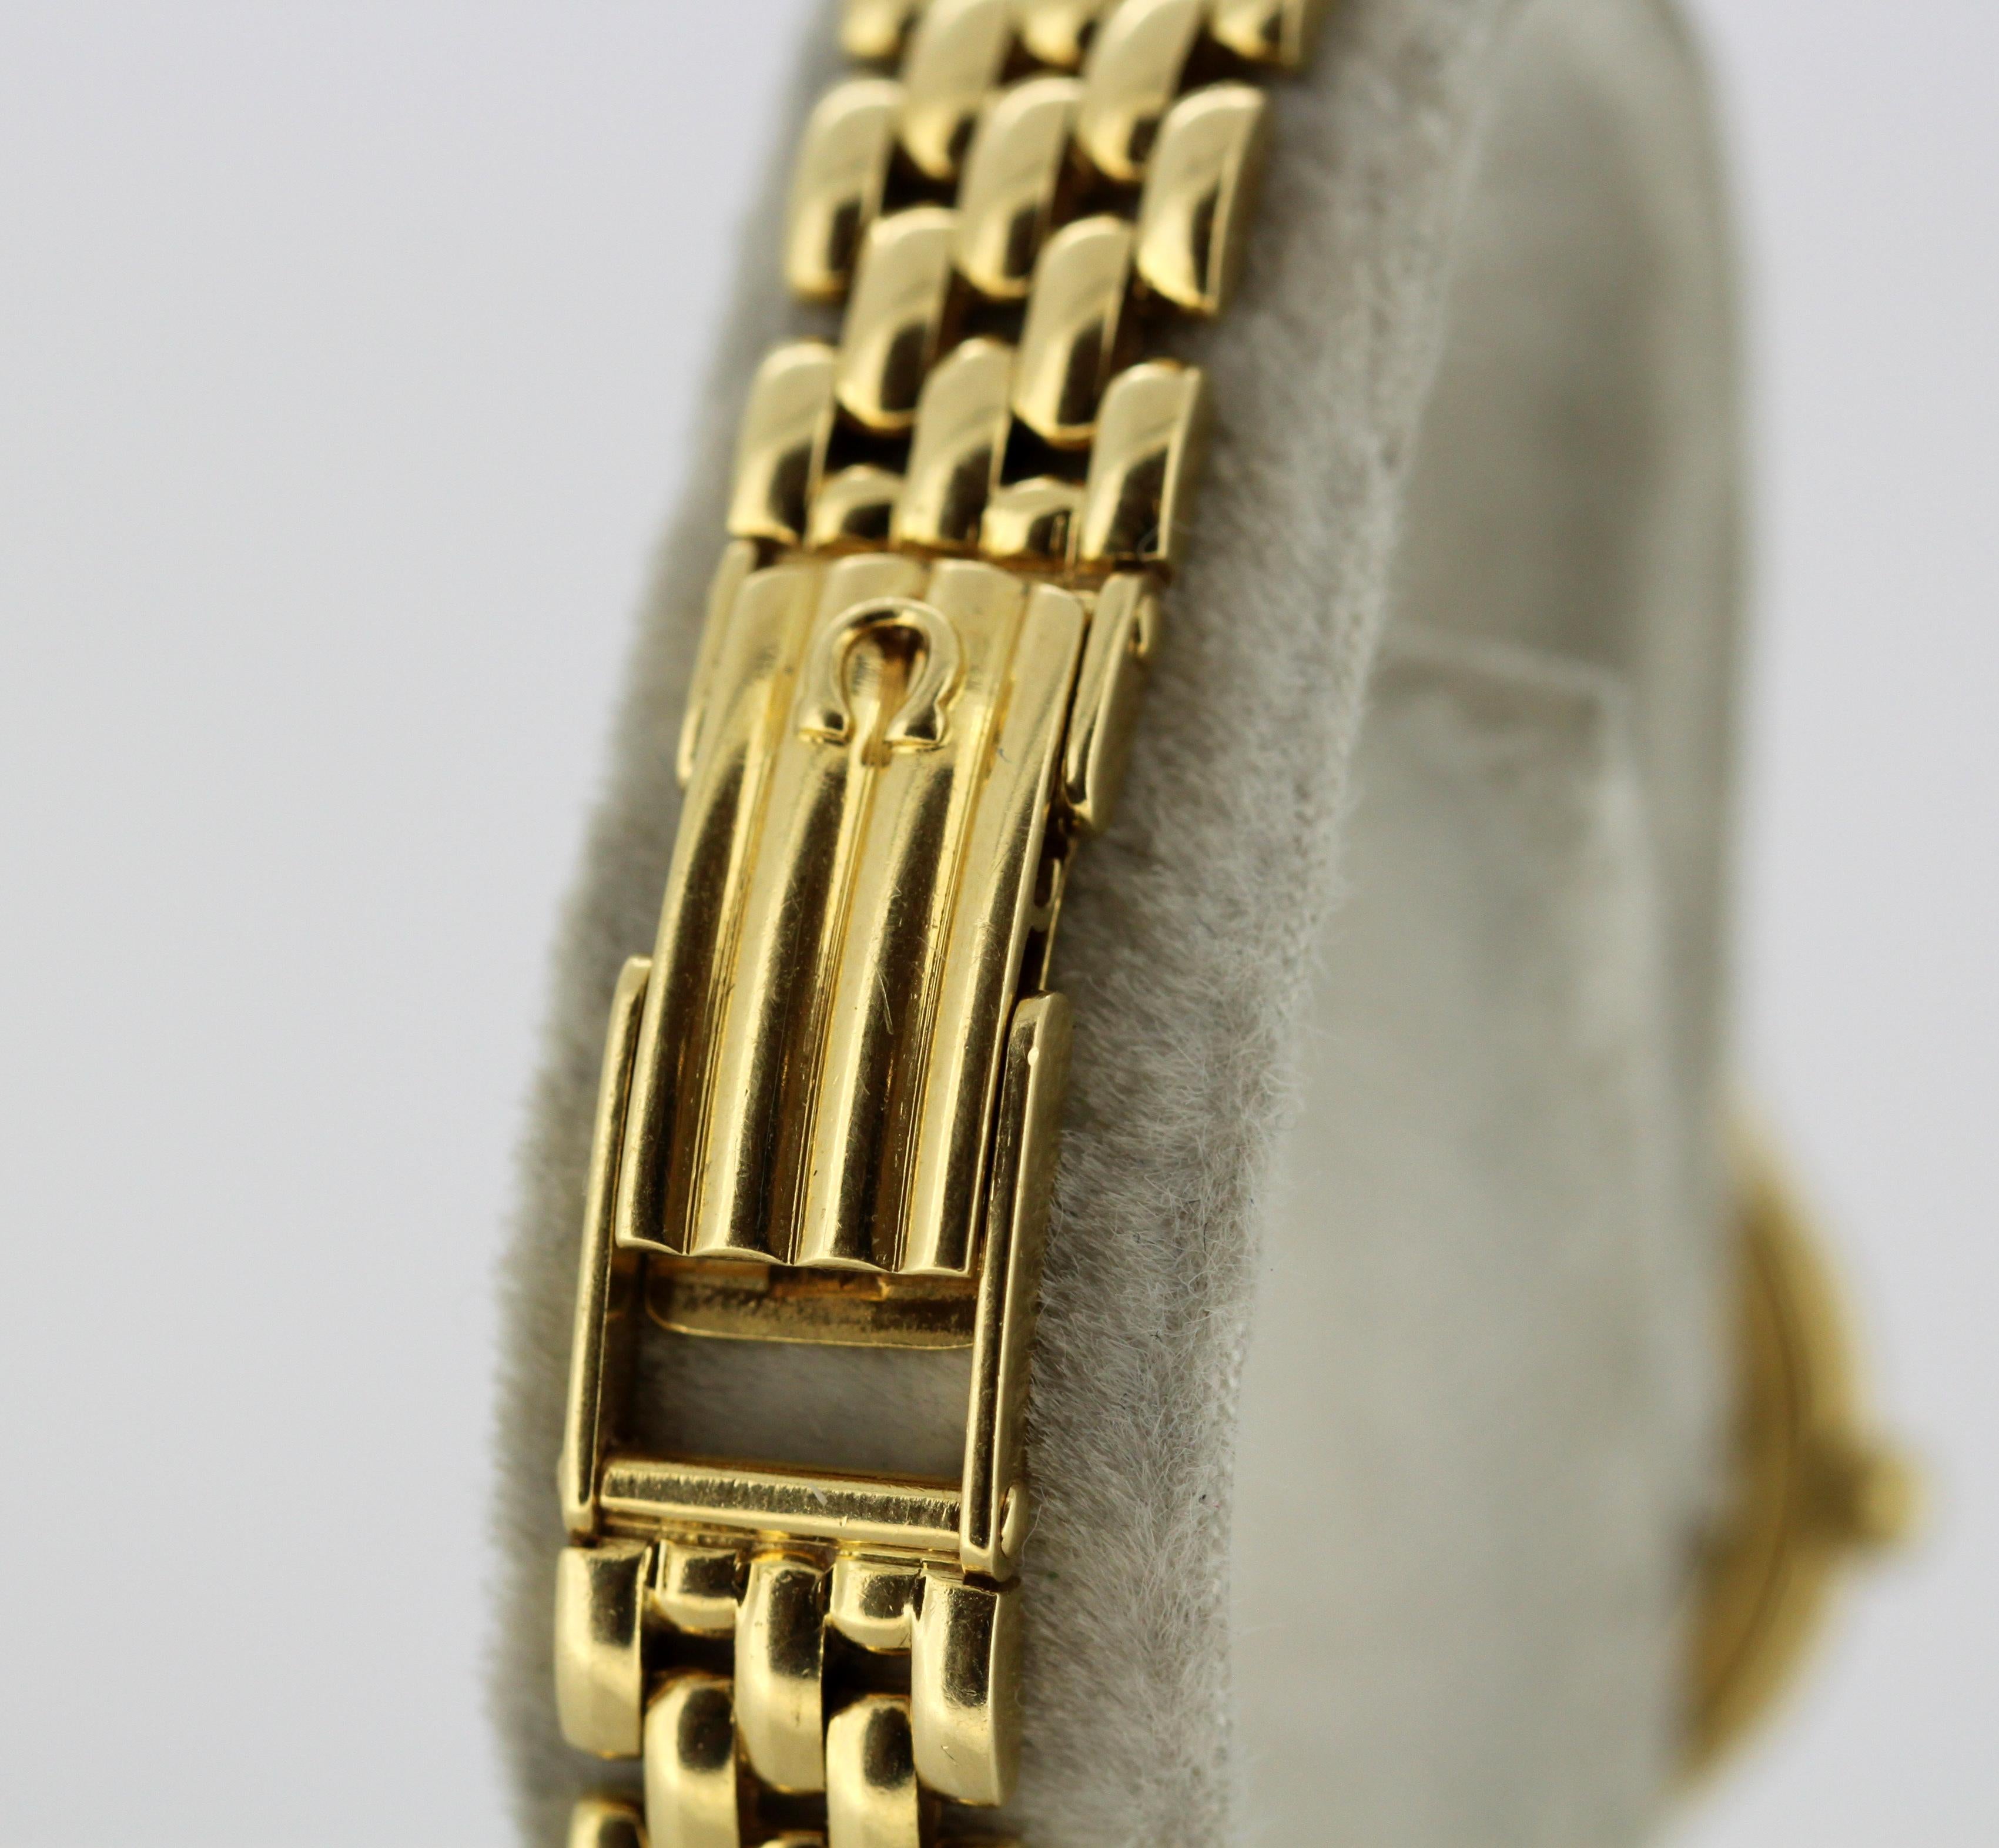 Ladies Omega wristwatch set in full 18k gold, diamond bezel & hour markers 8